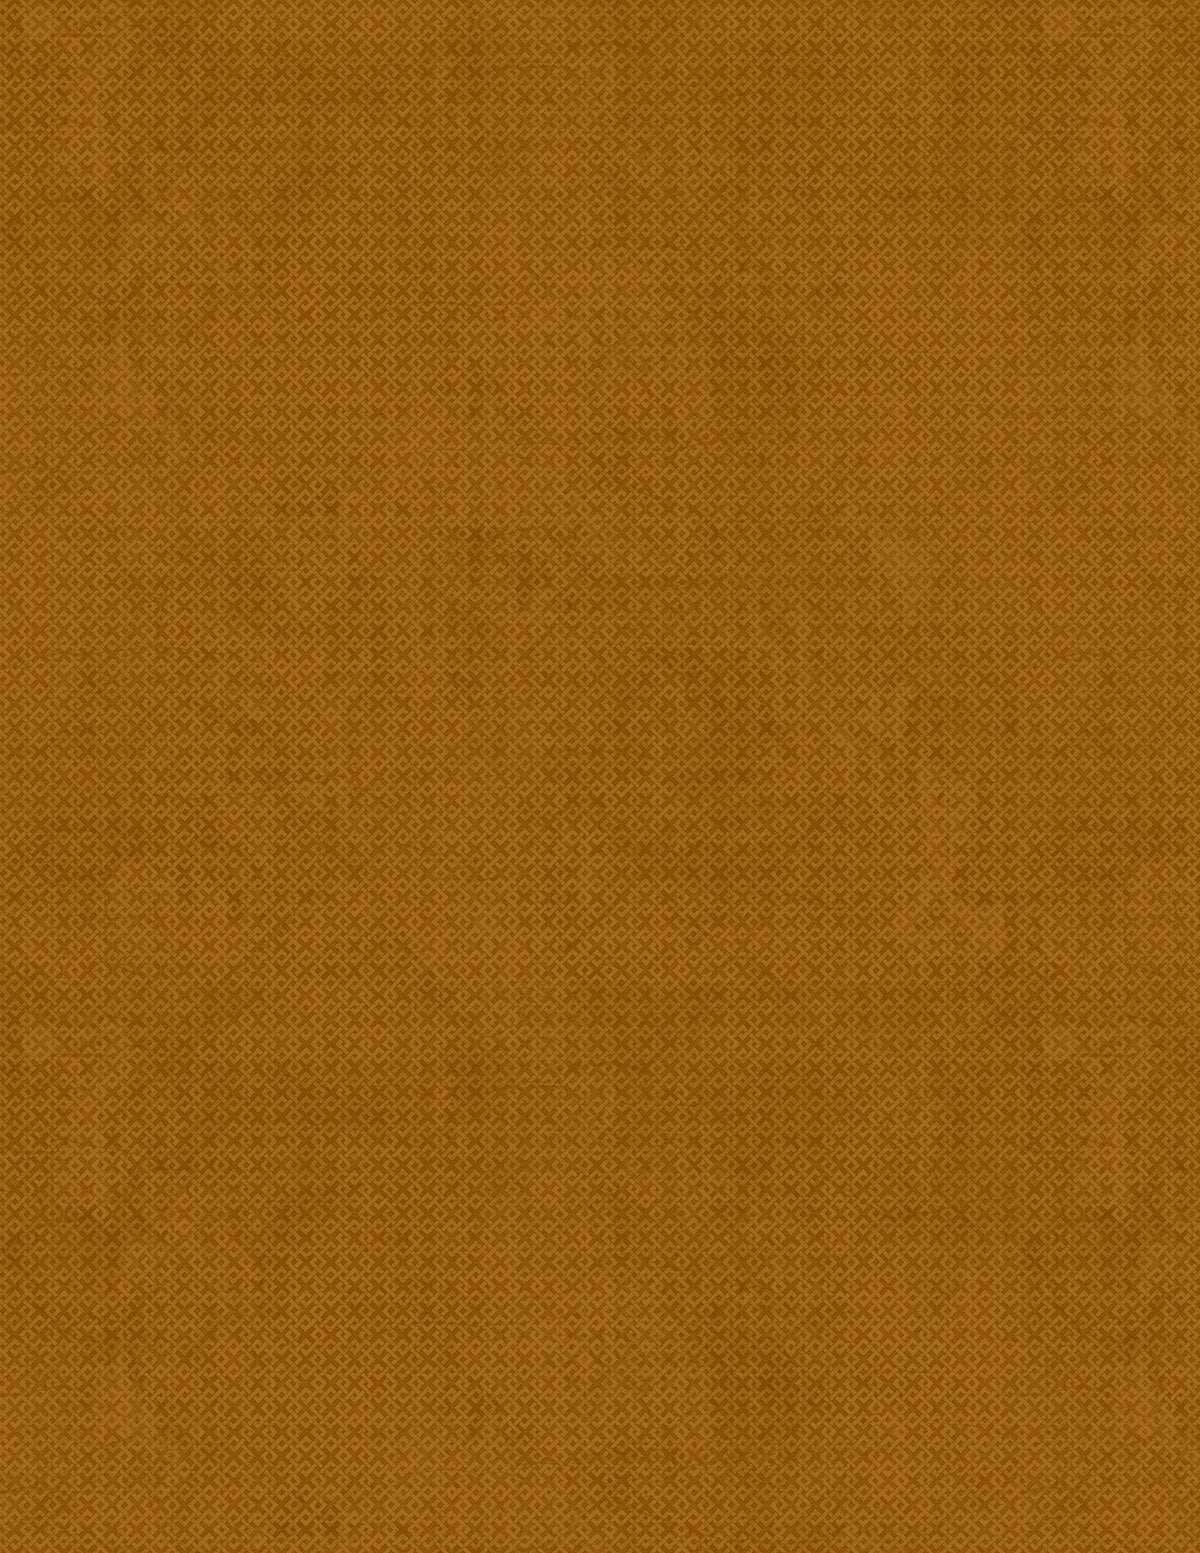 Essentials Criss Cross Quilt Fabric - Blender in Brown - 1825-85507-222